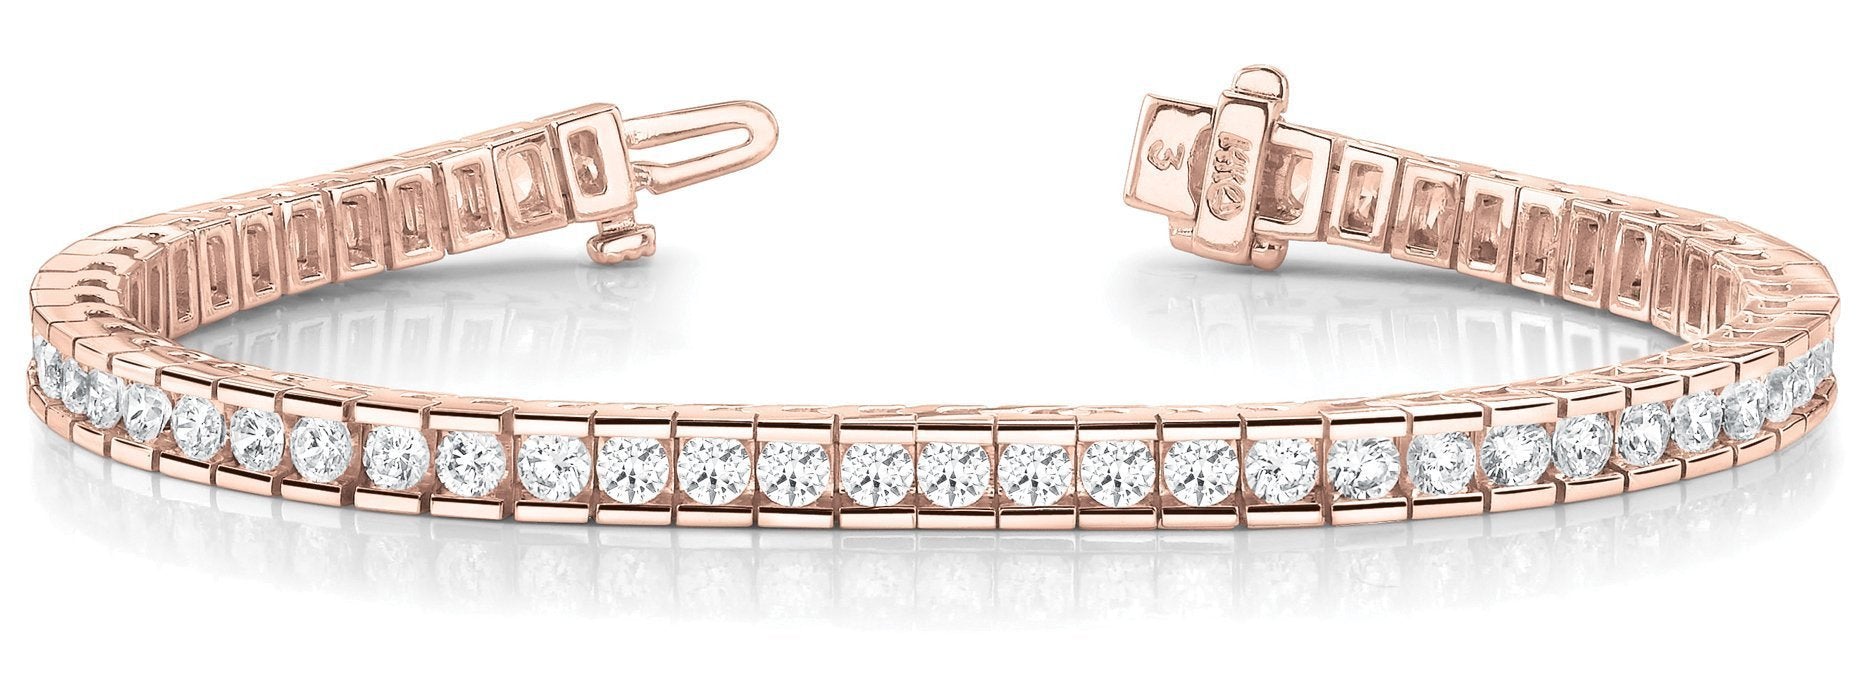 Diamond Tennis Bracelet Round Cut 10 carat in 14K-18K Rose Gold Front View